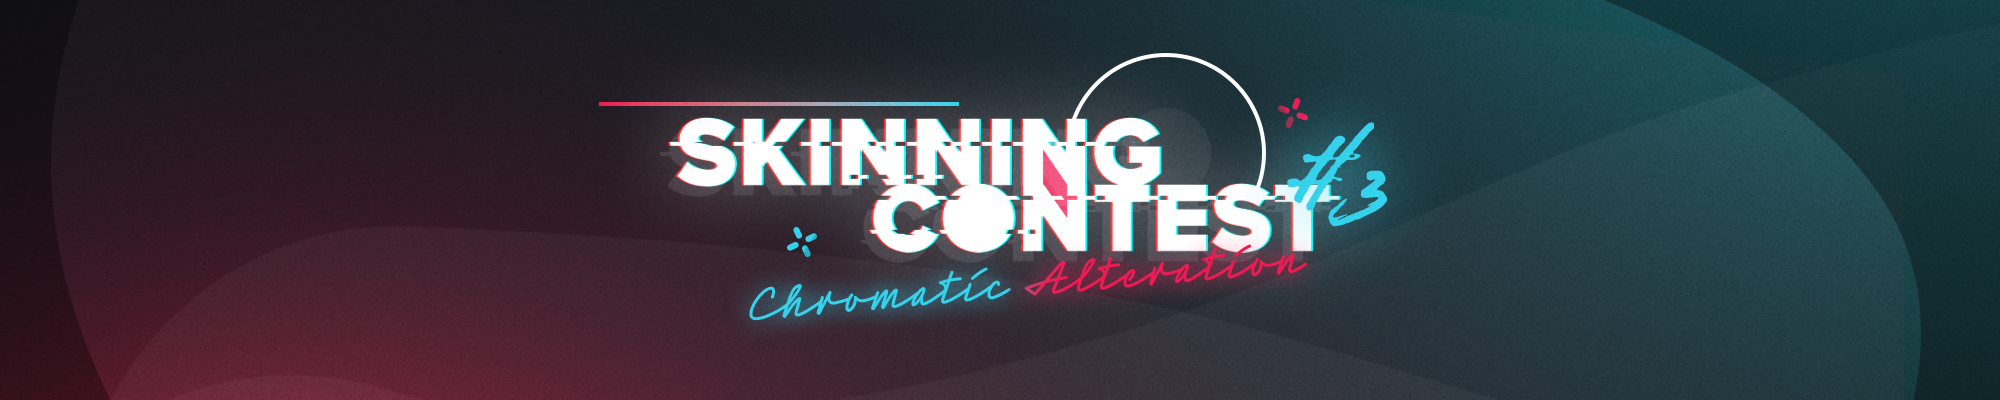 Skinning Contest #3 banner